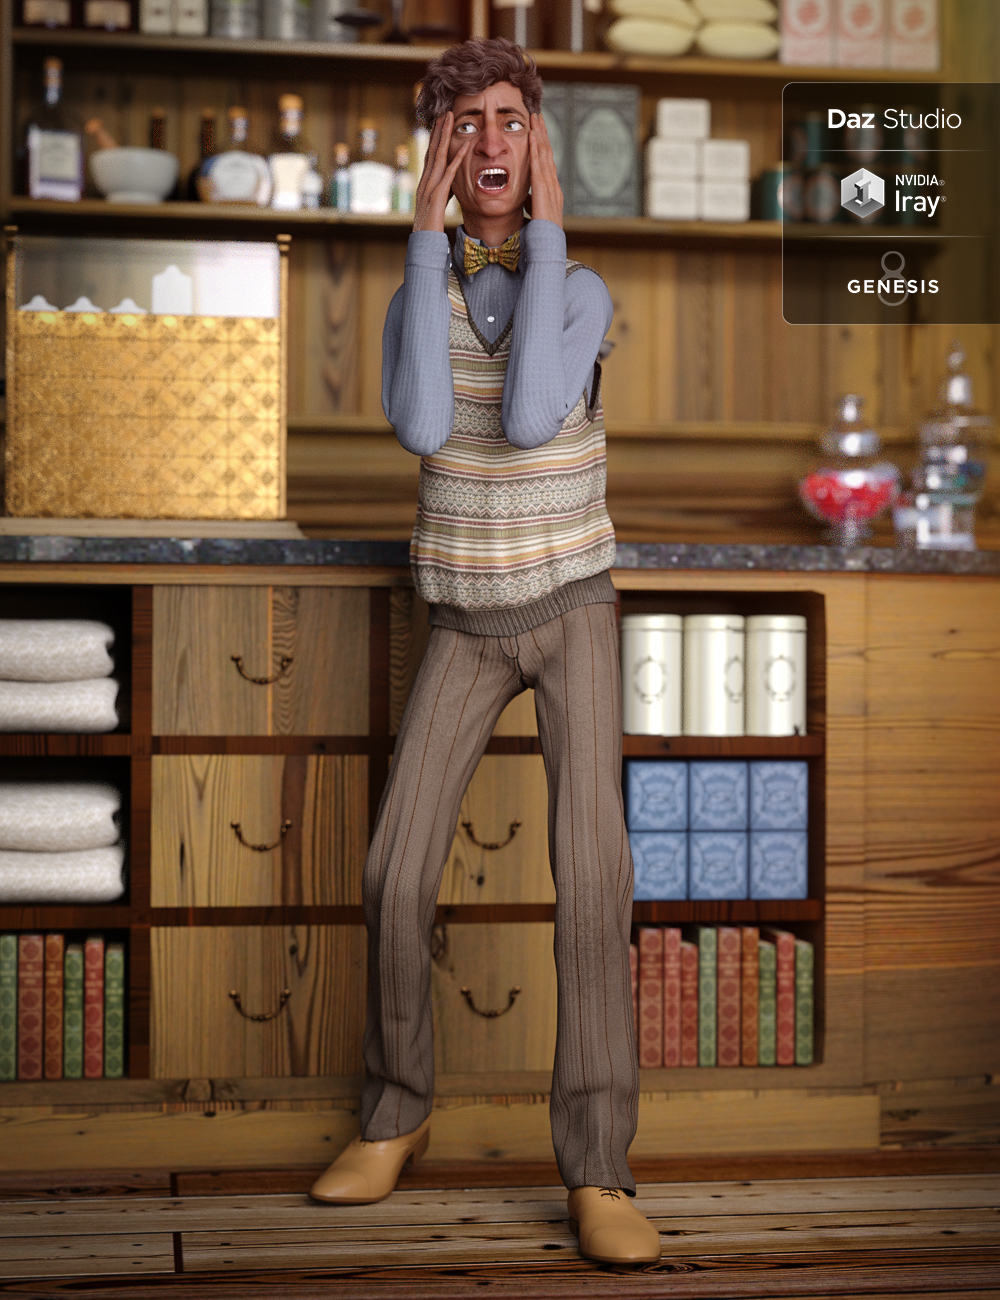 Sweater Vest Outfit Textures by: Arien, 3D Models by Daz 3D